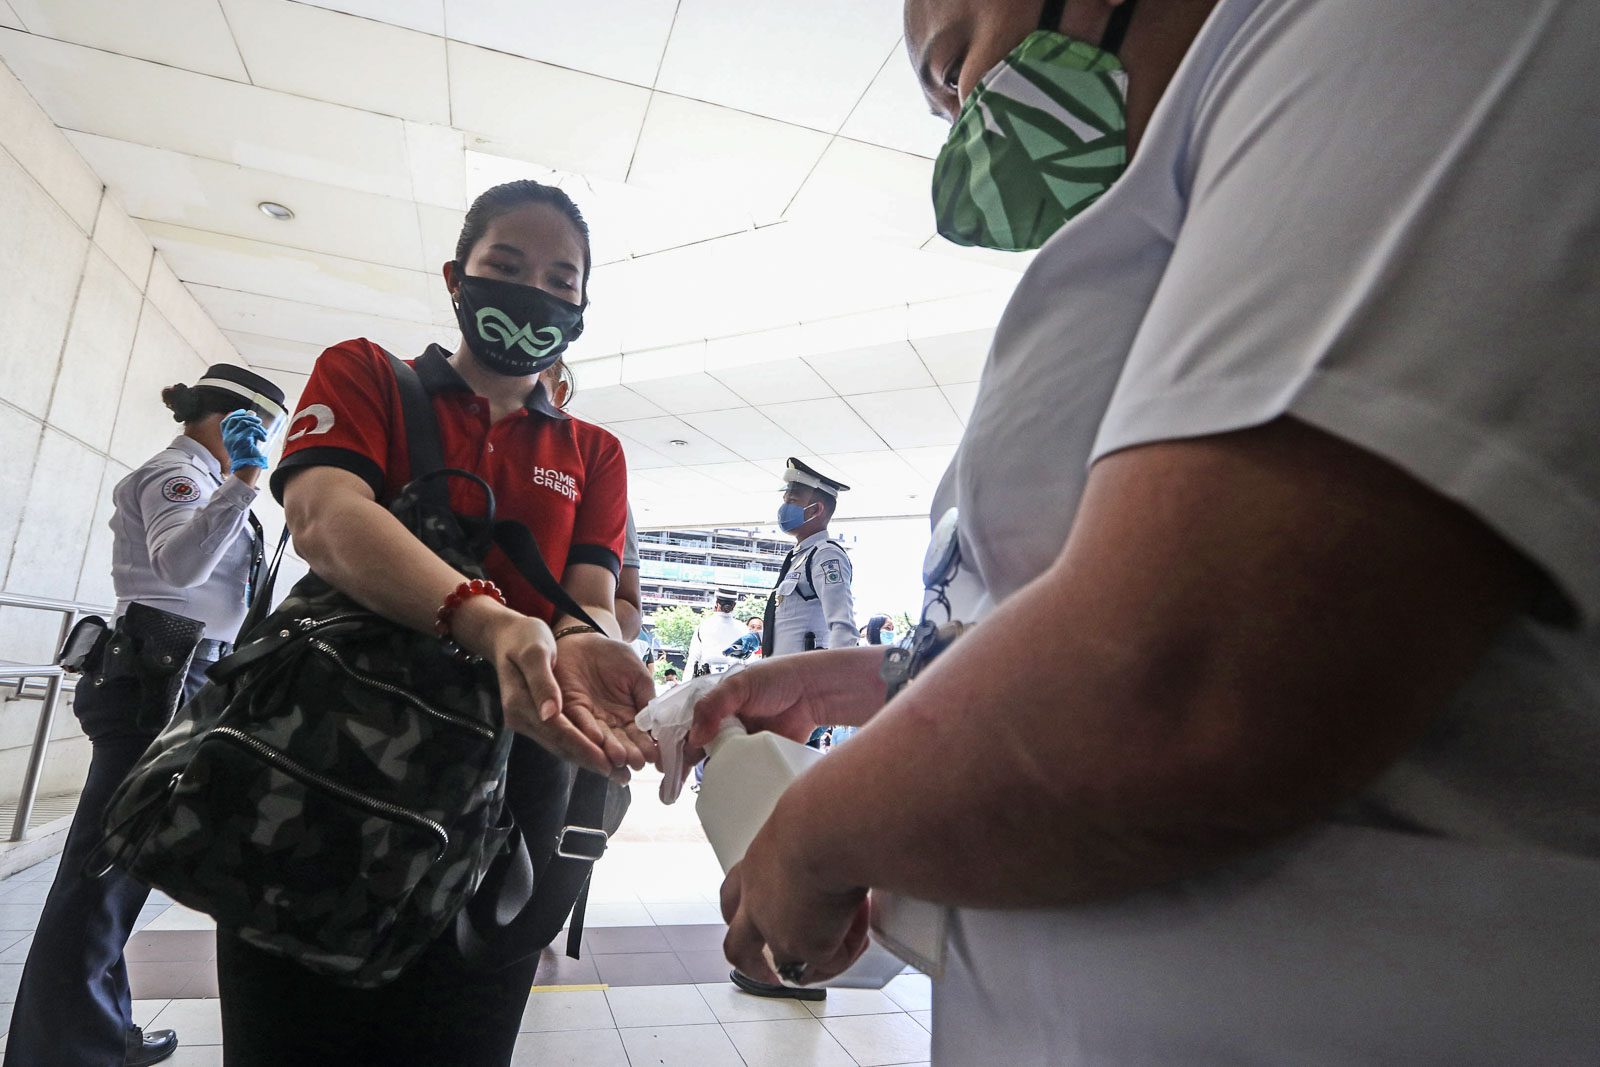 6 LGUs appeal for stricter quarantine protocols ahead of Duterte decision